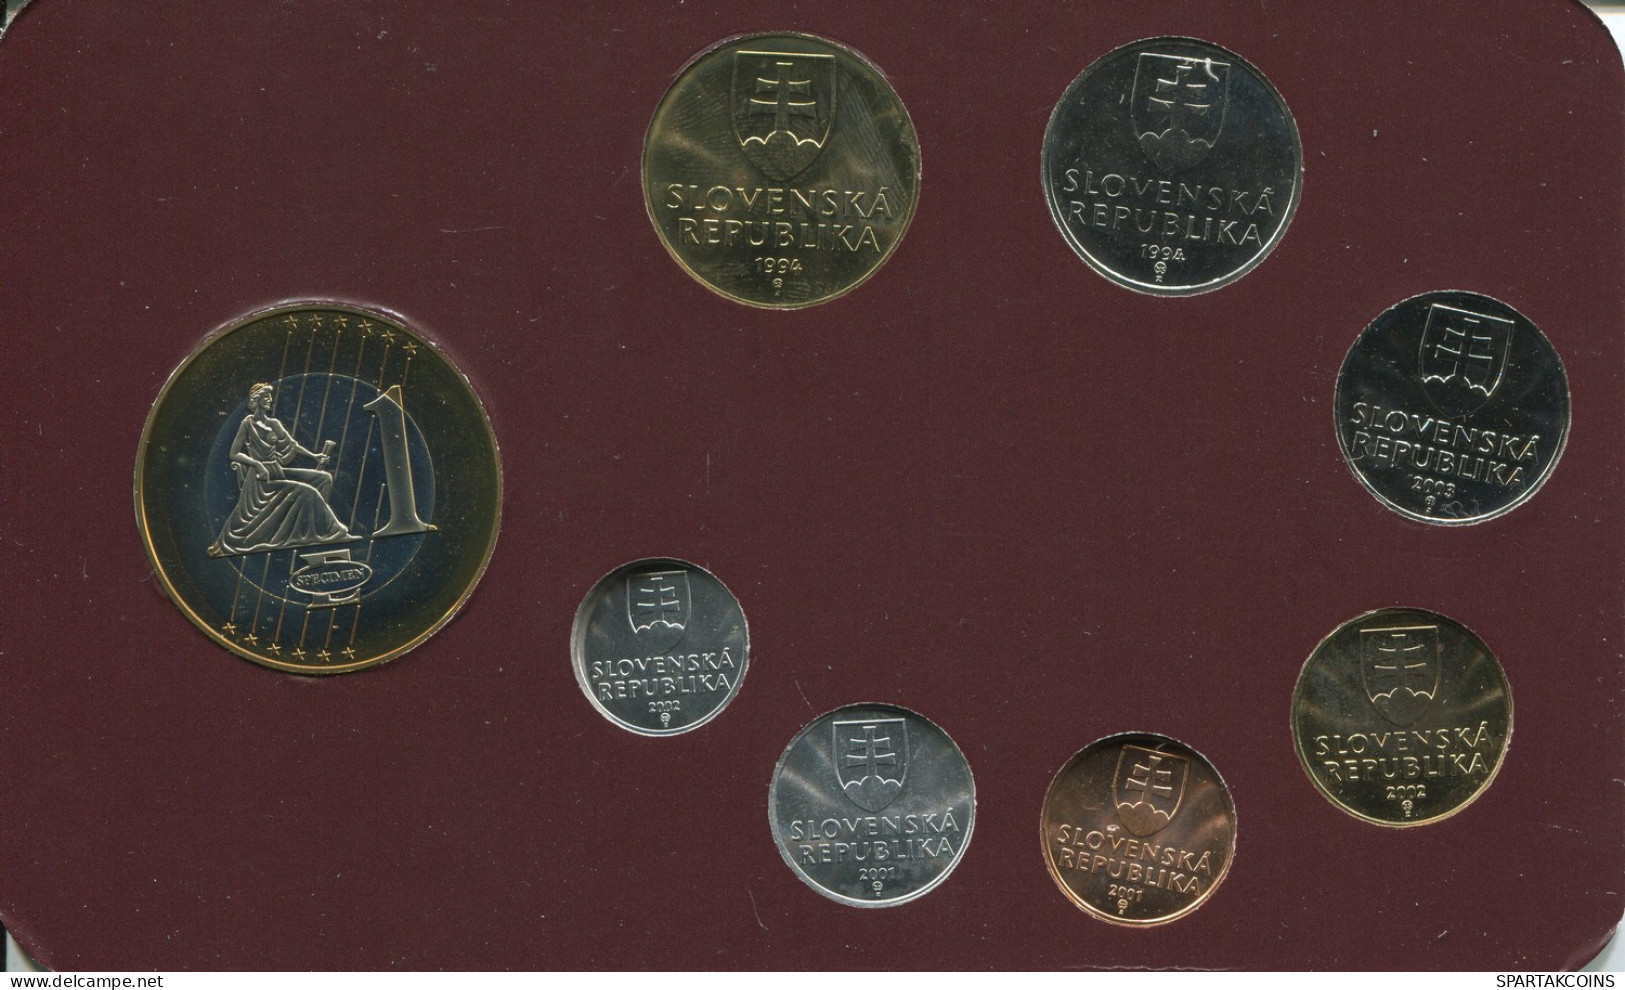 SLOVENSKA REPUBLIKA 1992-2004 Coin SET 7 Coin + MEDAL UNC #SET1253.13.U - Slovenia